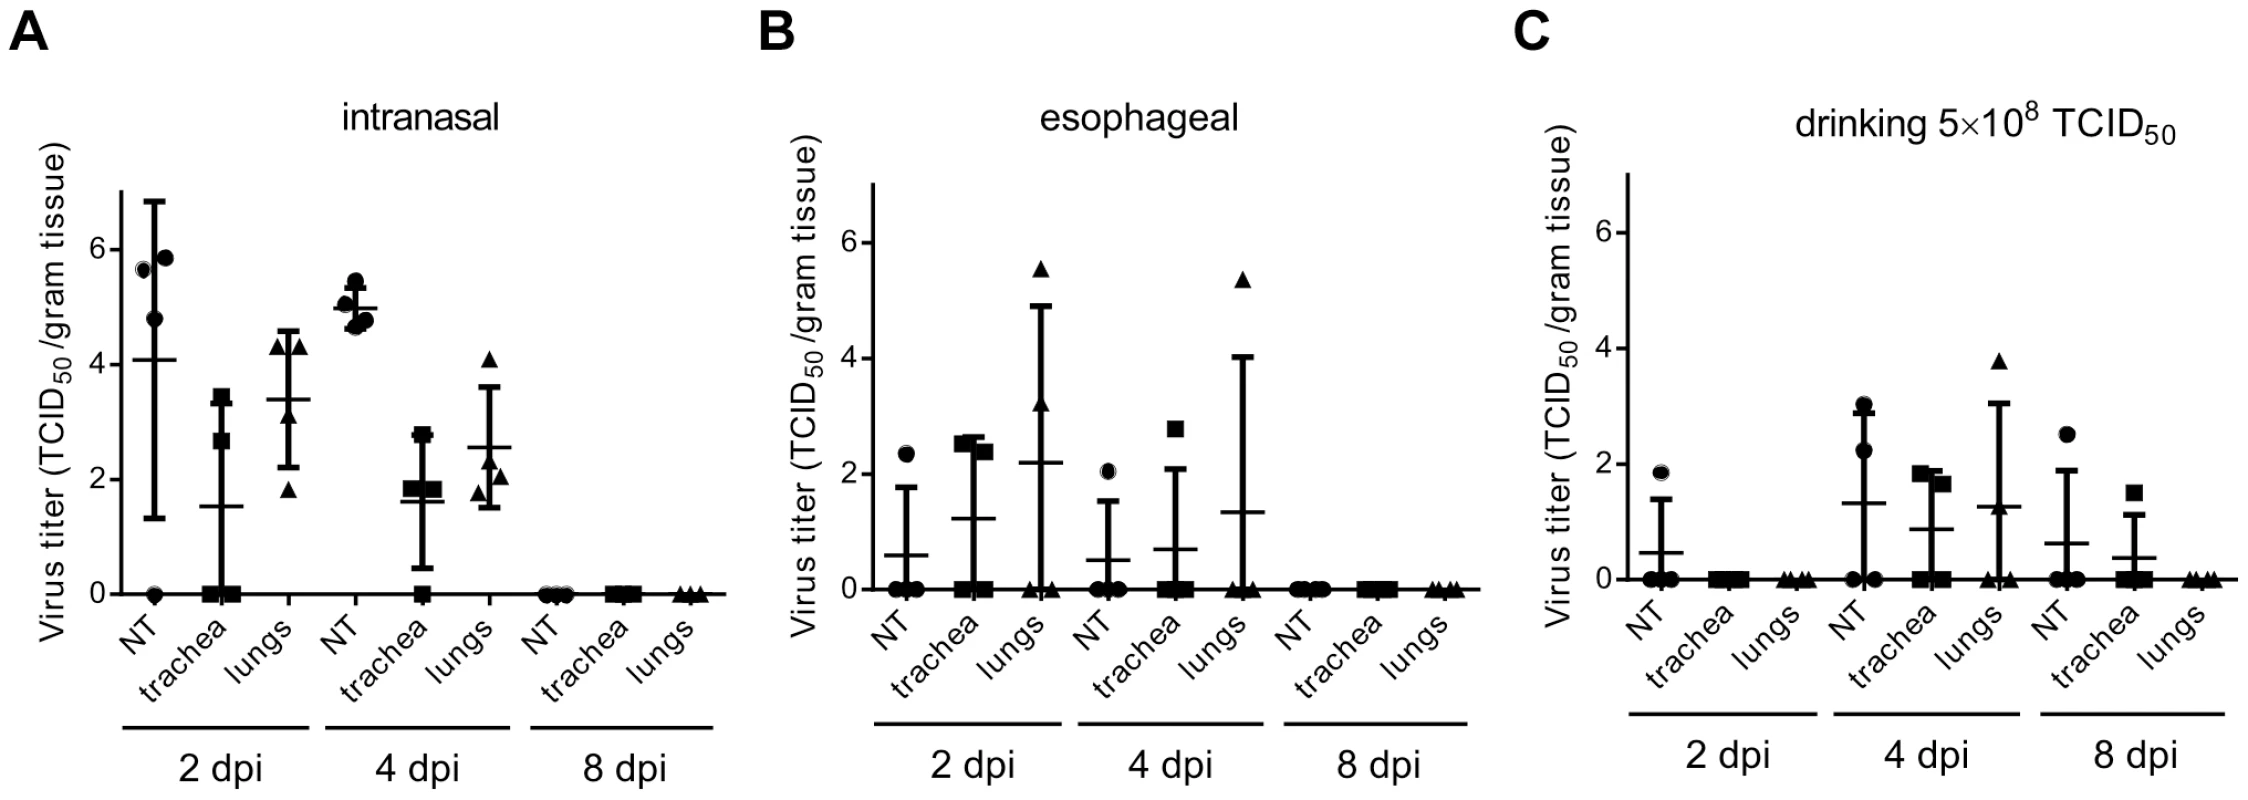 Virus titers in respiratory tissues of hamsters inoculated with Nipah virus.